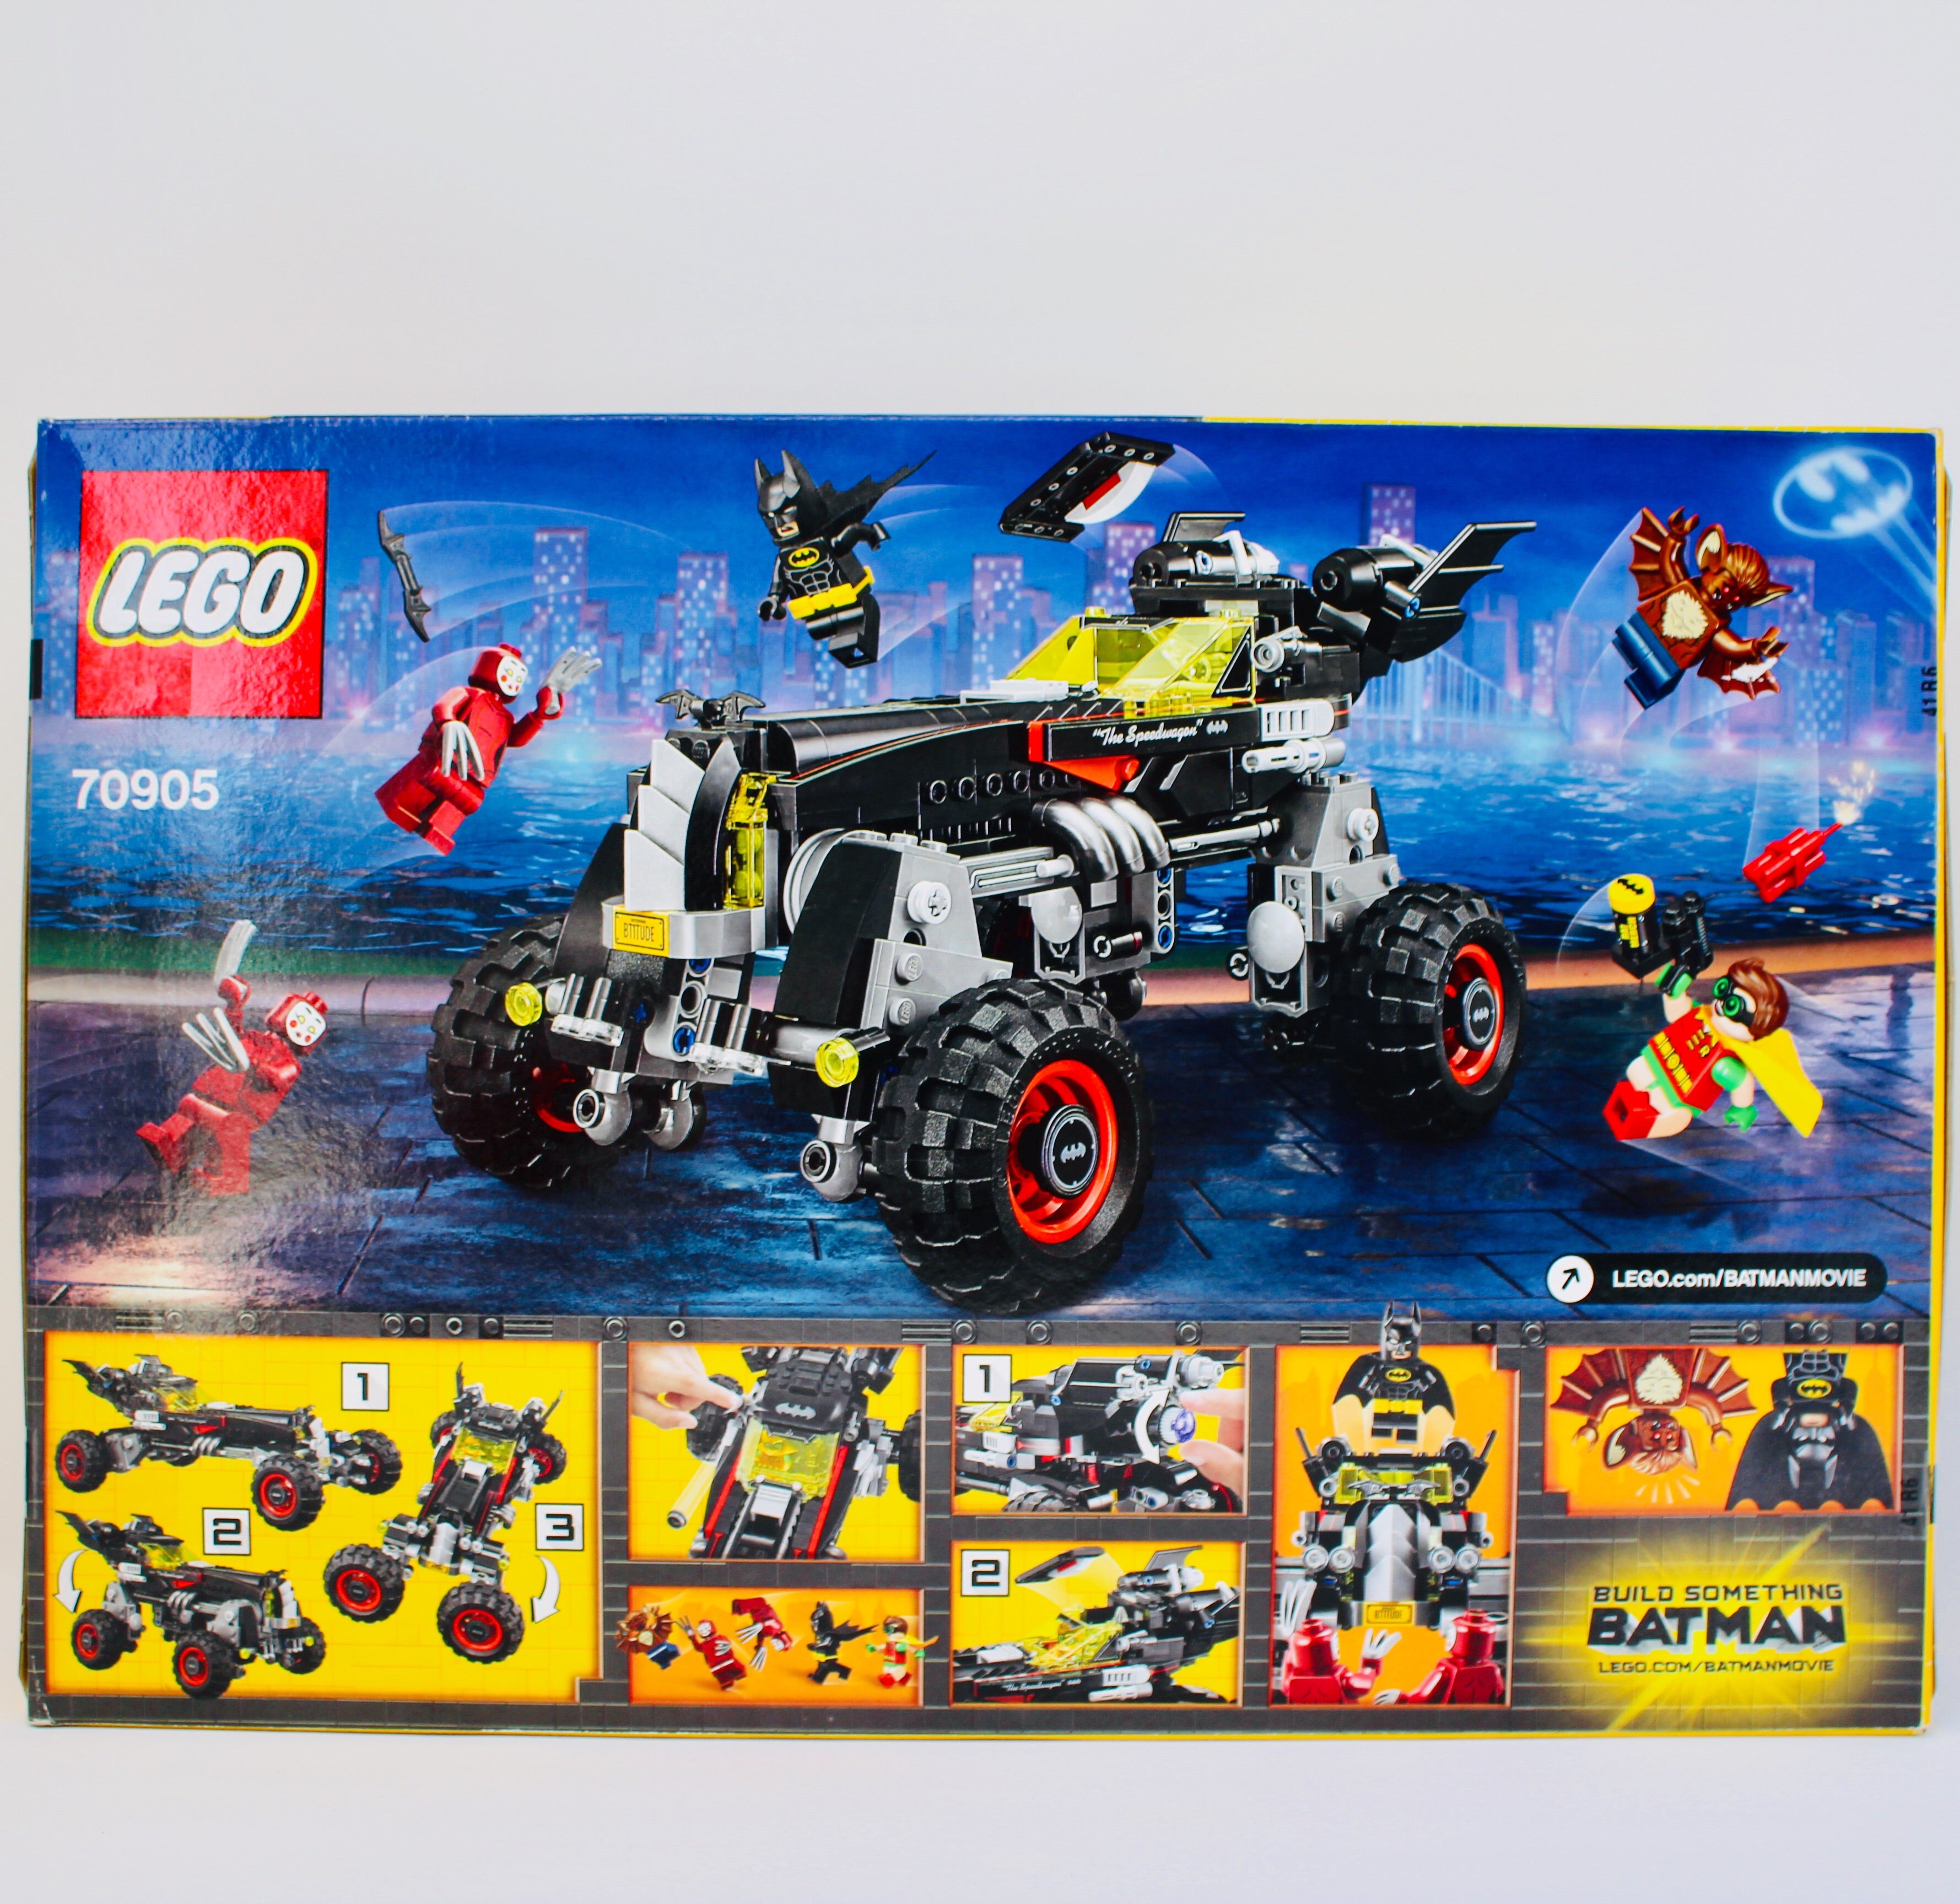 Retired Set 70905 The LEGO Batman Movie The Batmobile